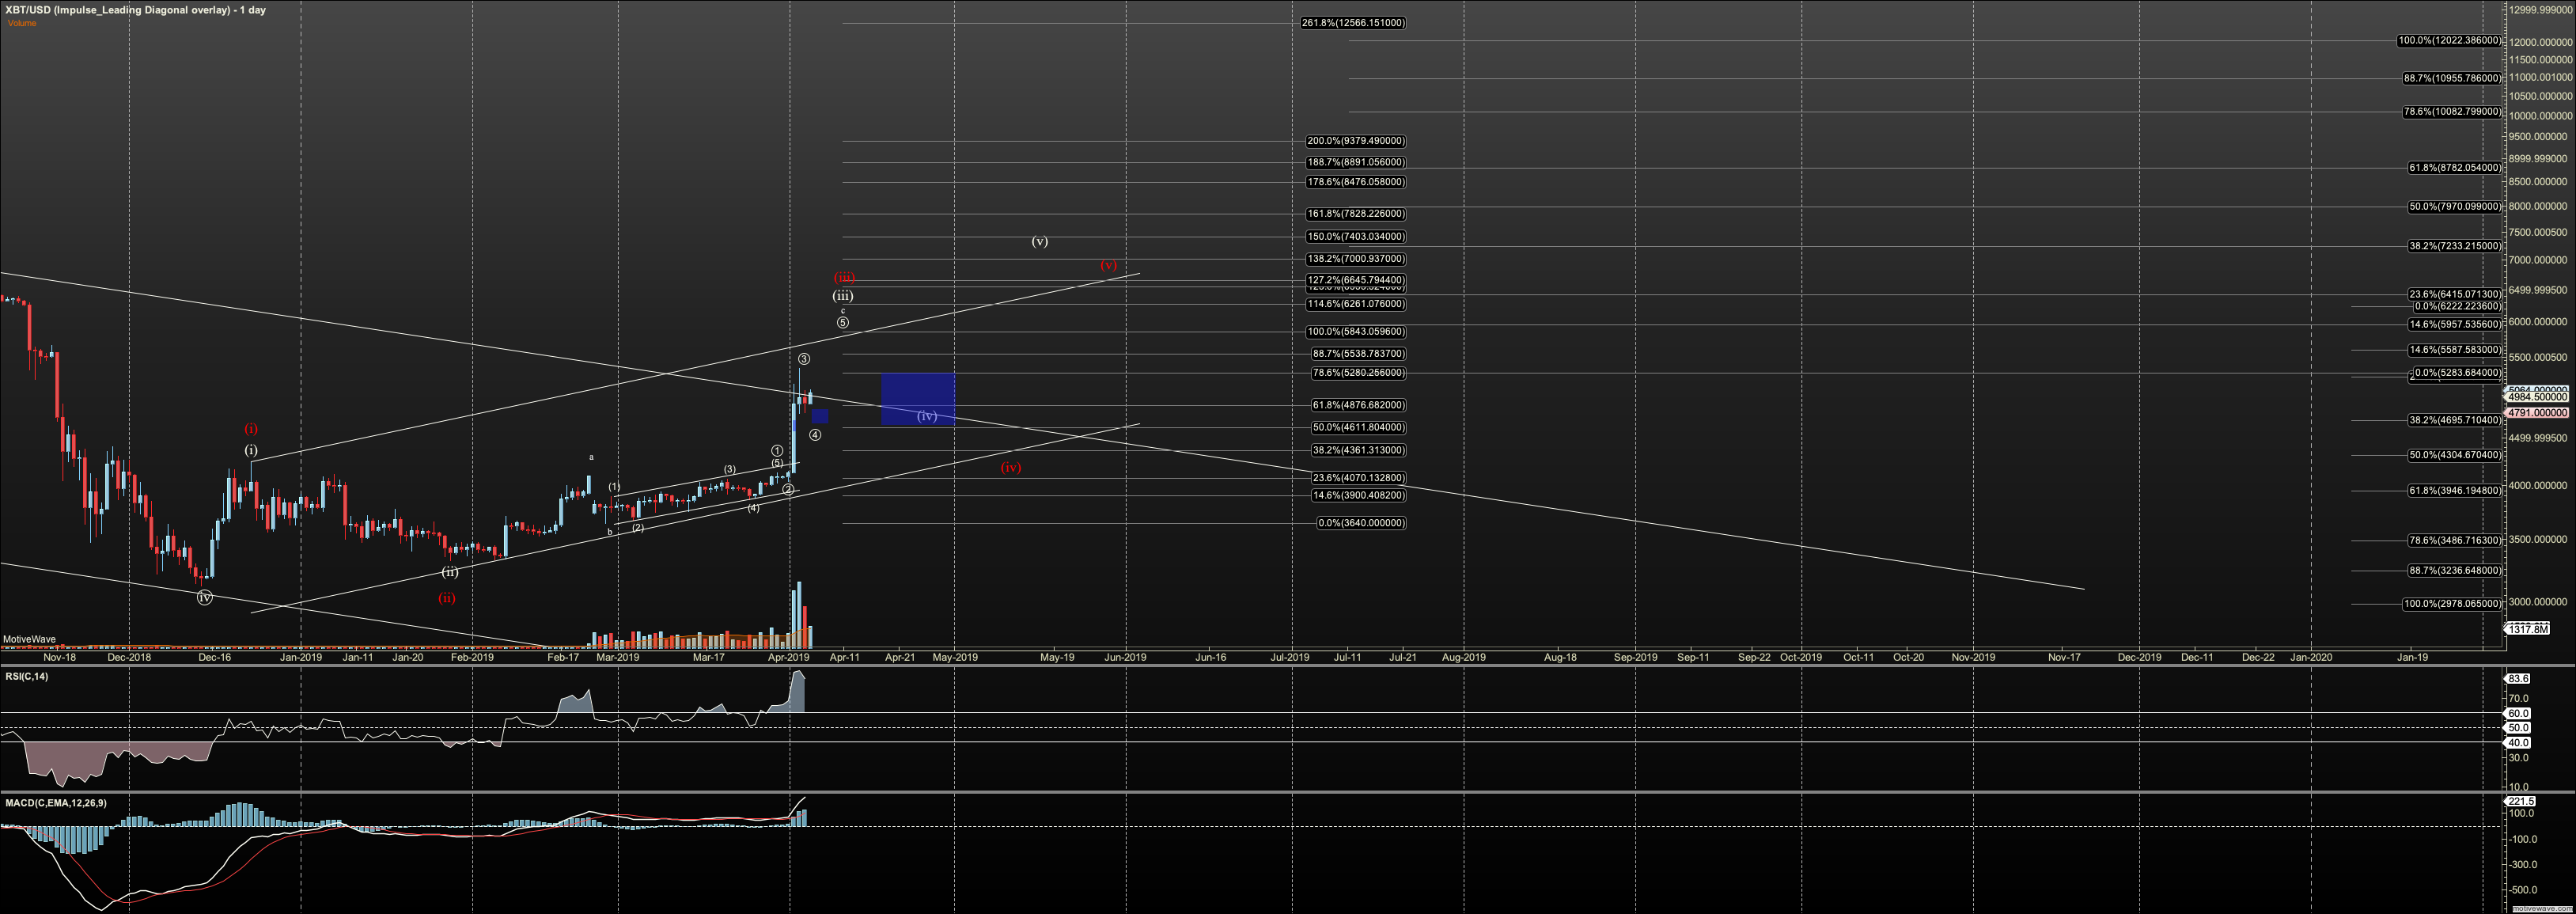 XBTUSD - Impulse Leading Diagonal overlay - Apr-05 1629 PM (1 day)